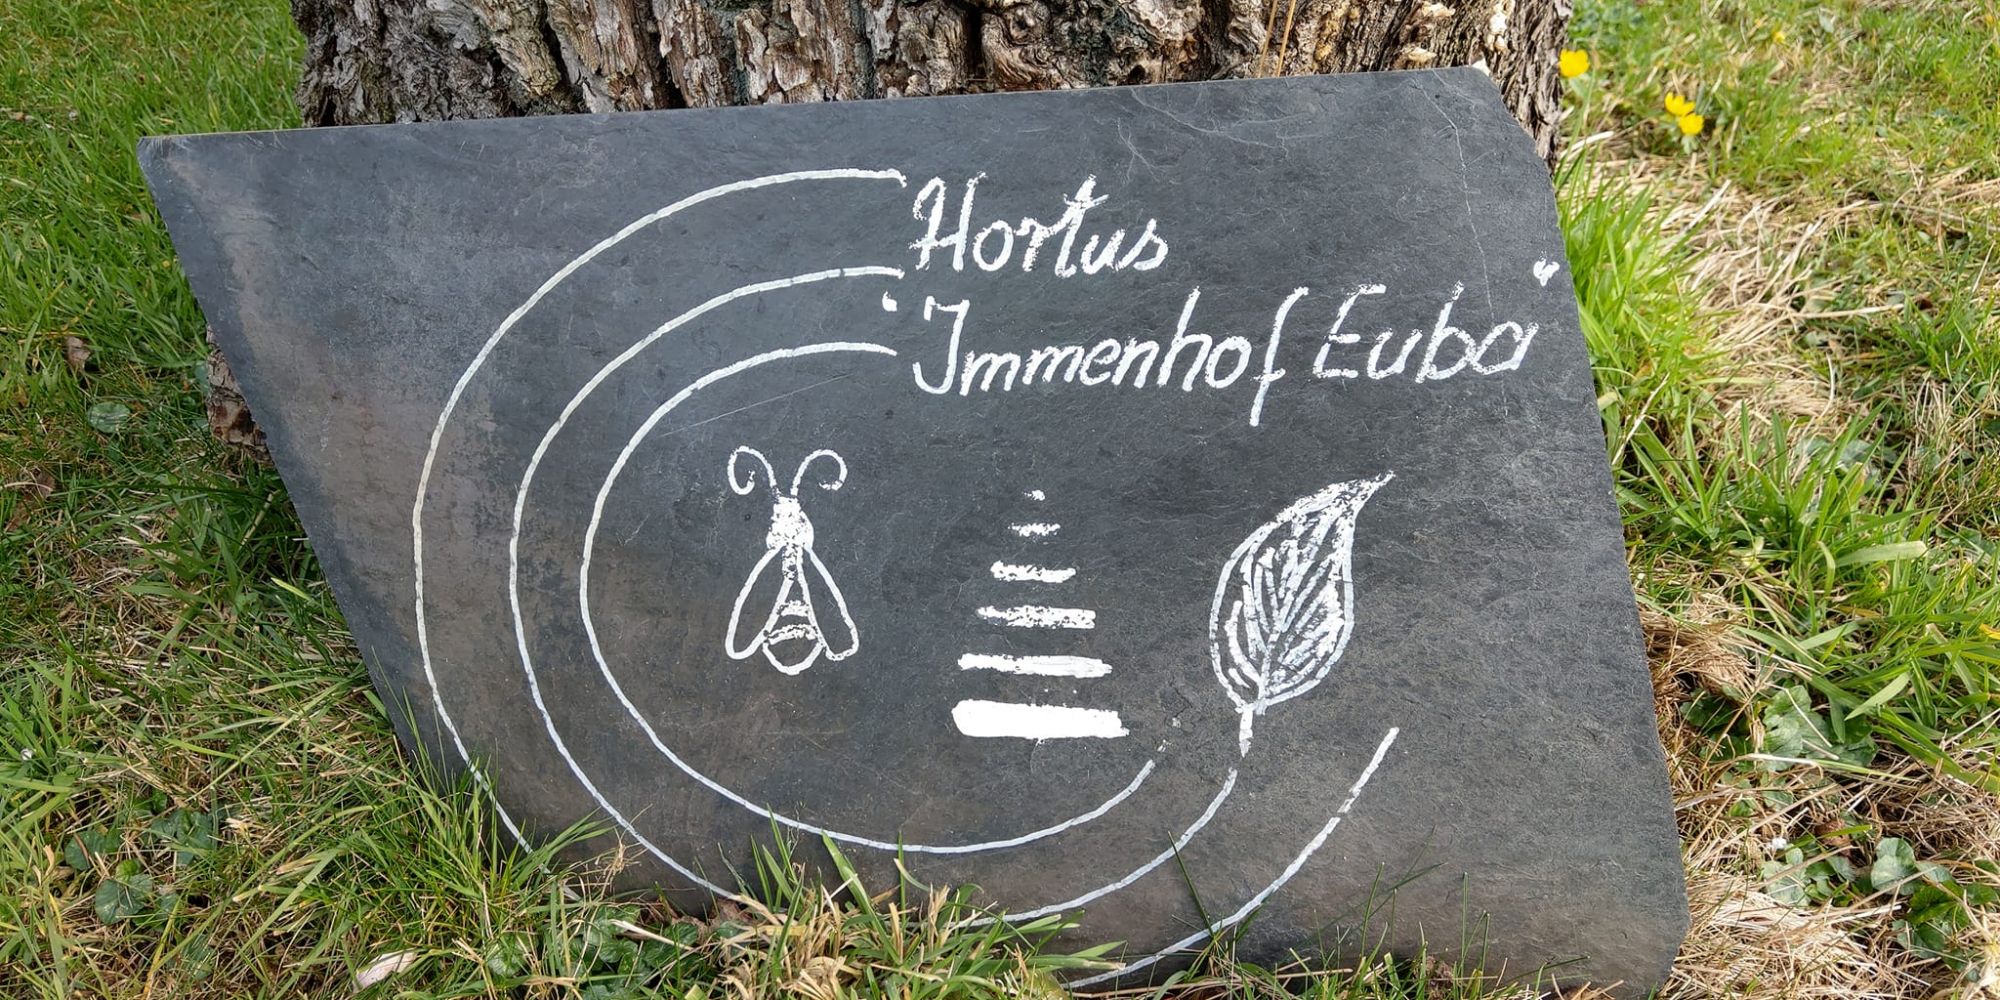 Hortus Immenhof Euba